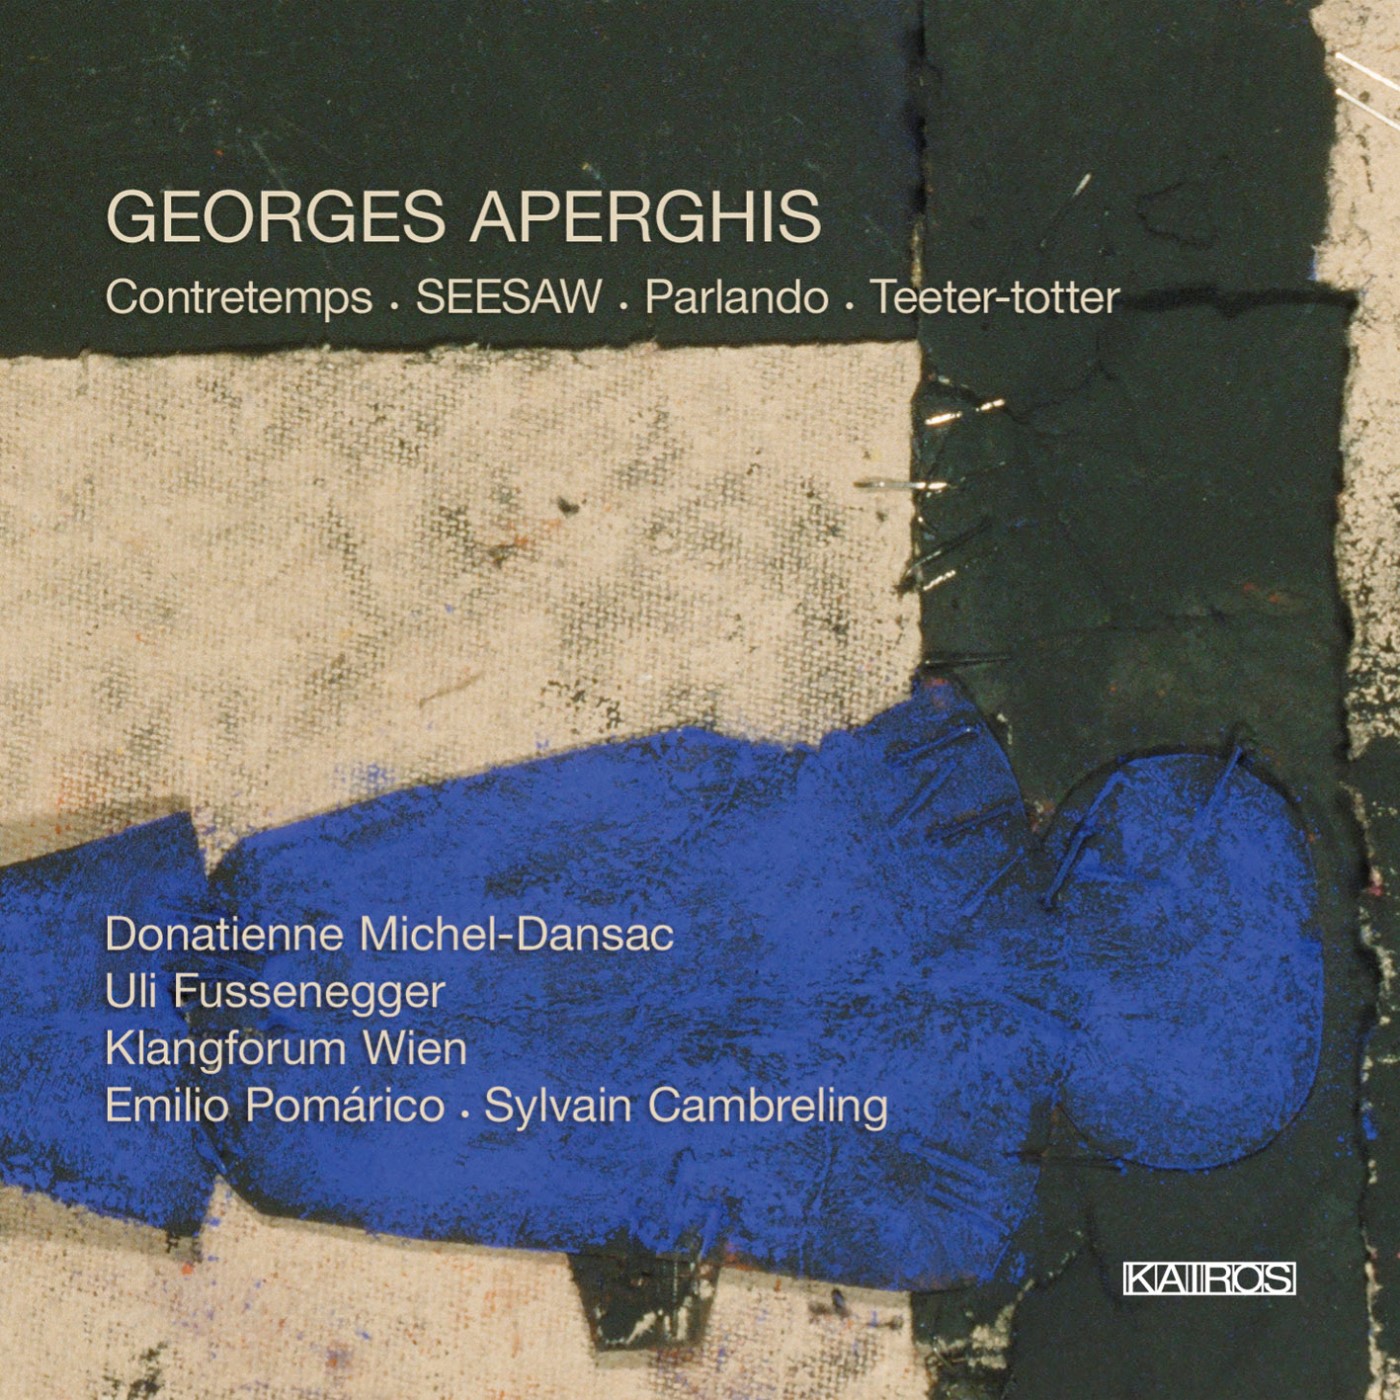 Georges Aperghis